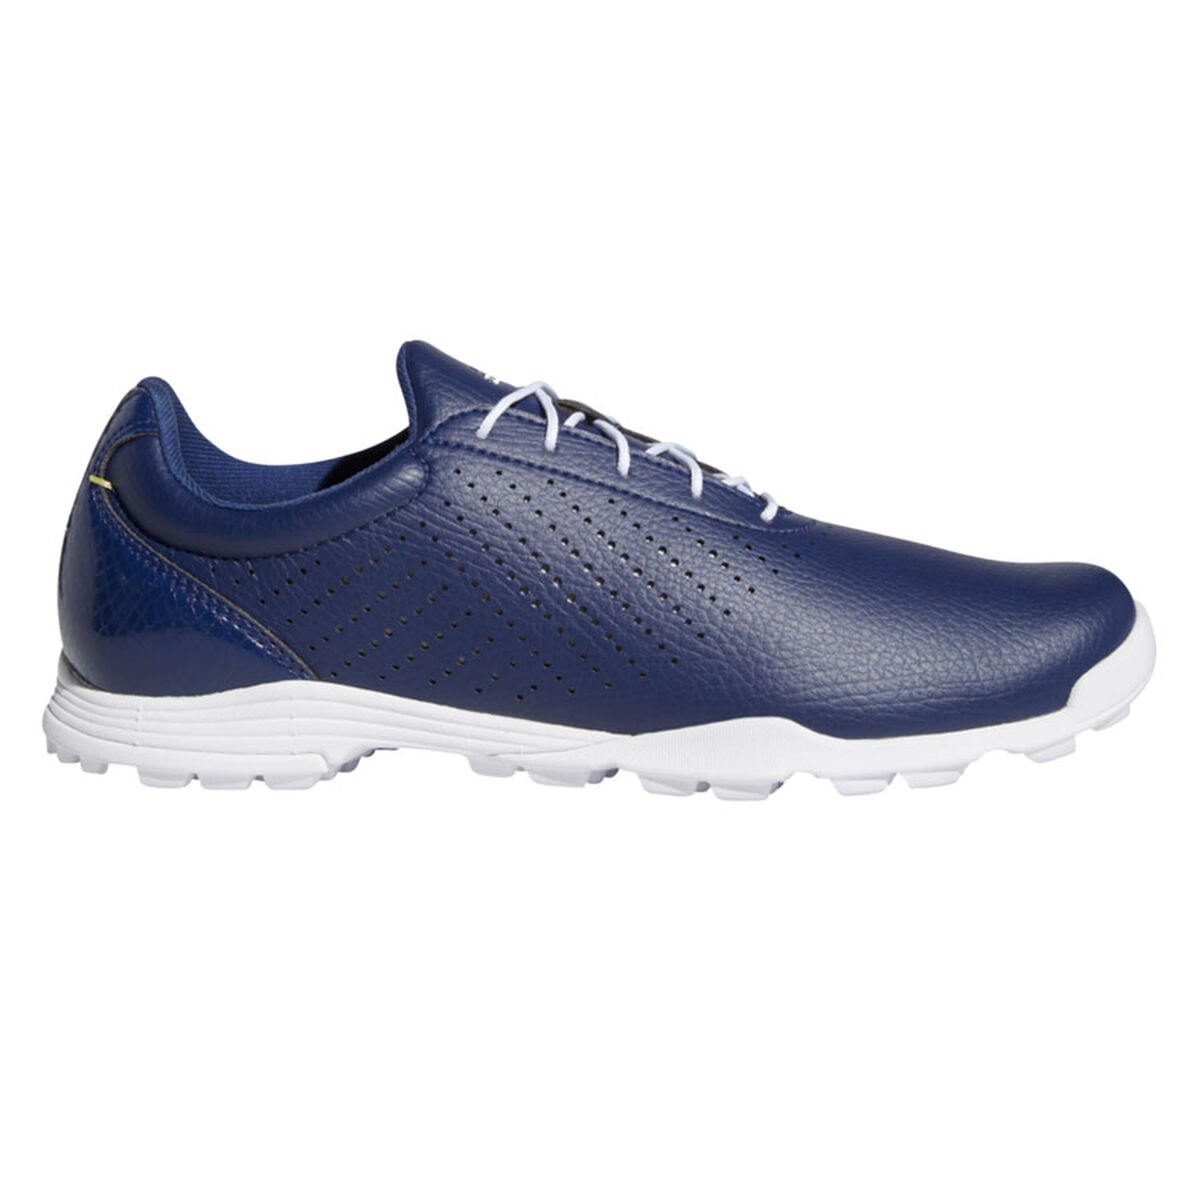 Chaussures adidas Golf Adipure SC pour femmes, femme, 4, Tech indigo, Normal | Online Golf